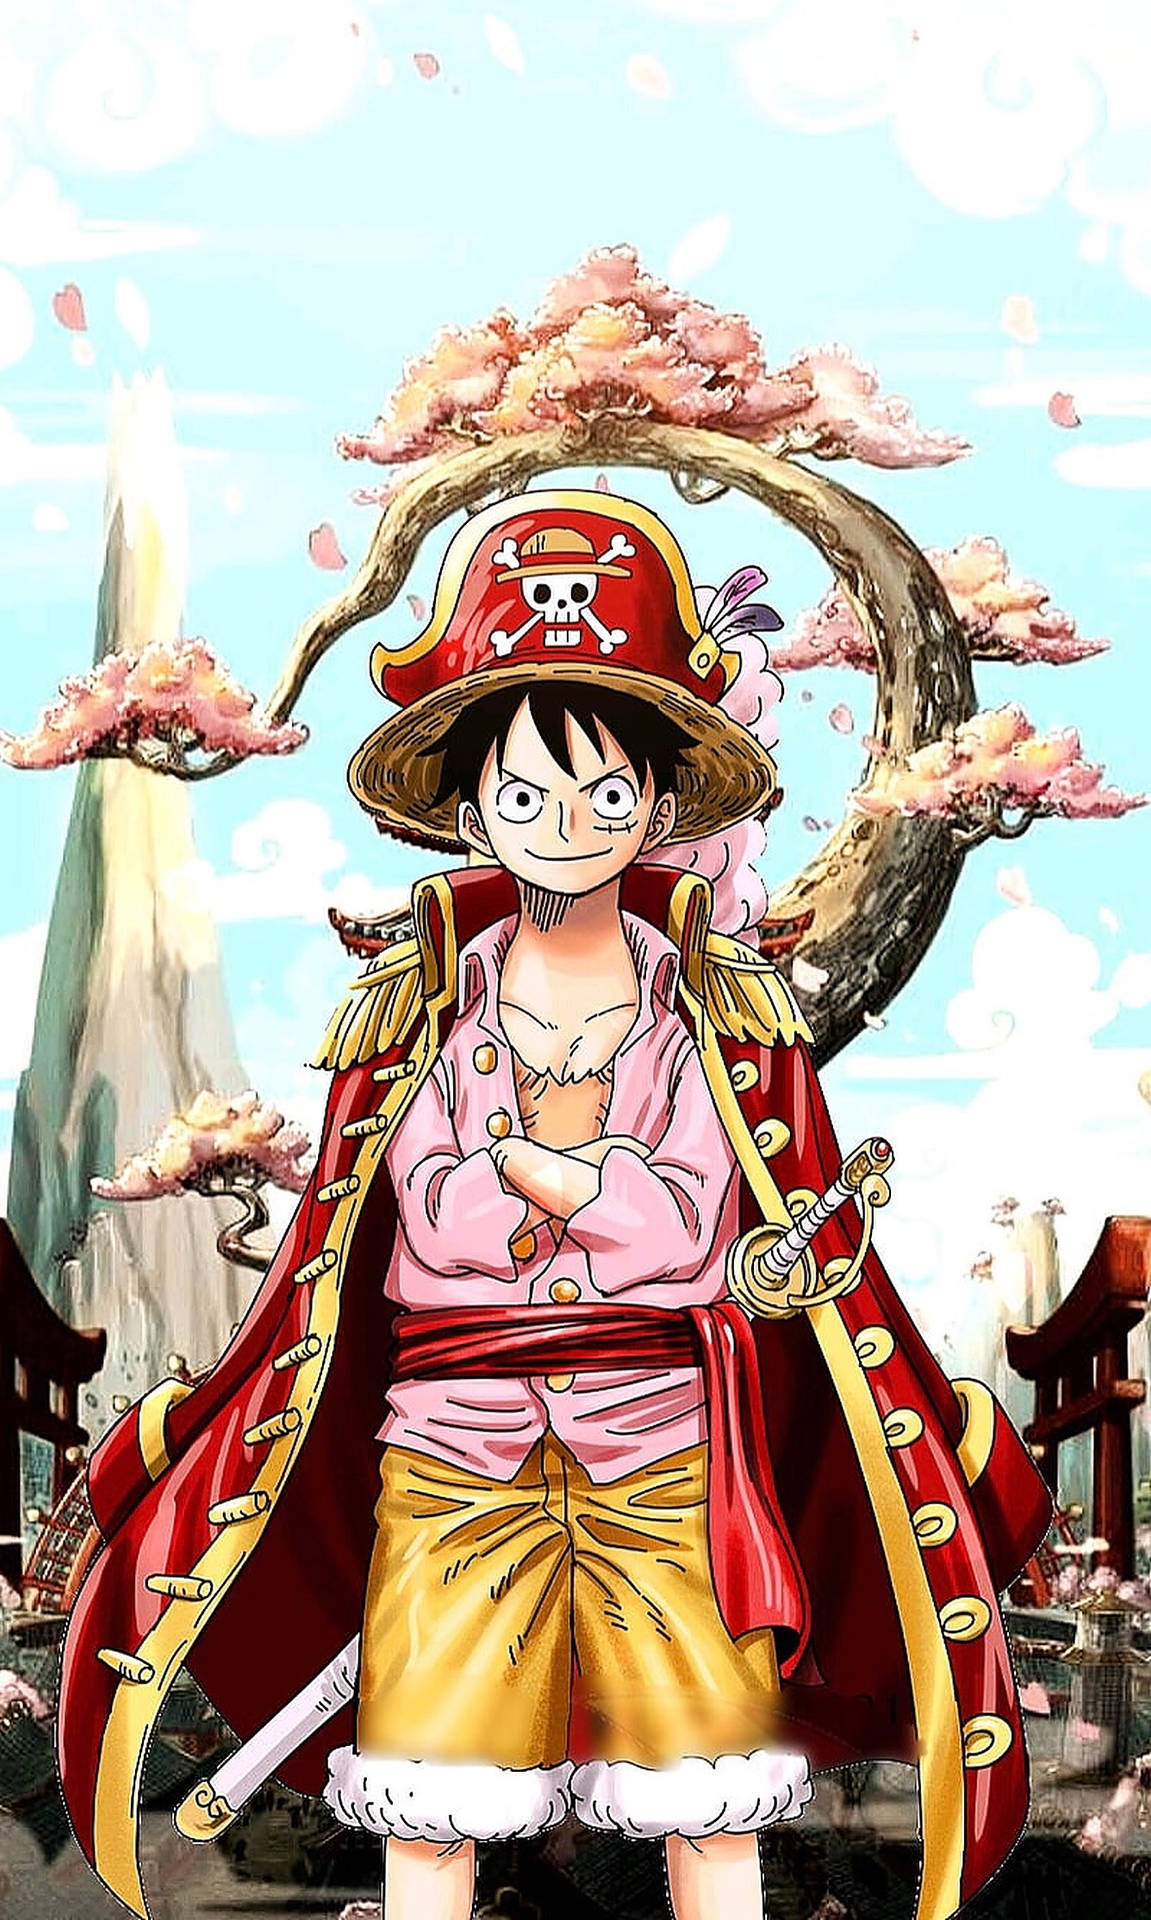 38+] One Piece Anime iPhone Wallpapers - WallpaperSafari